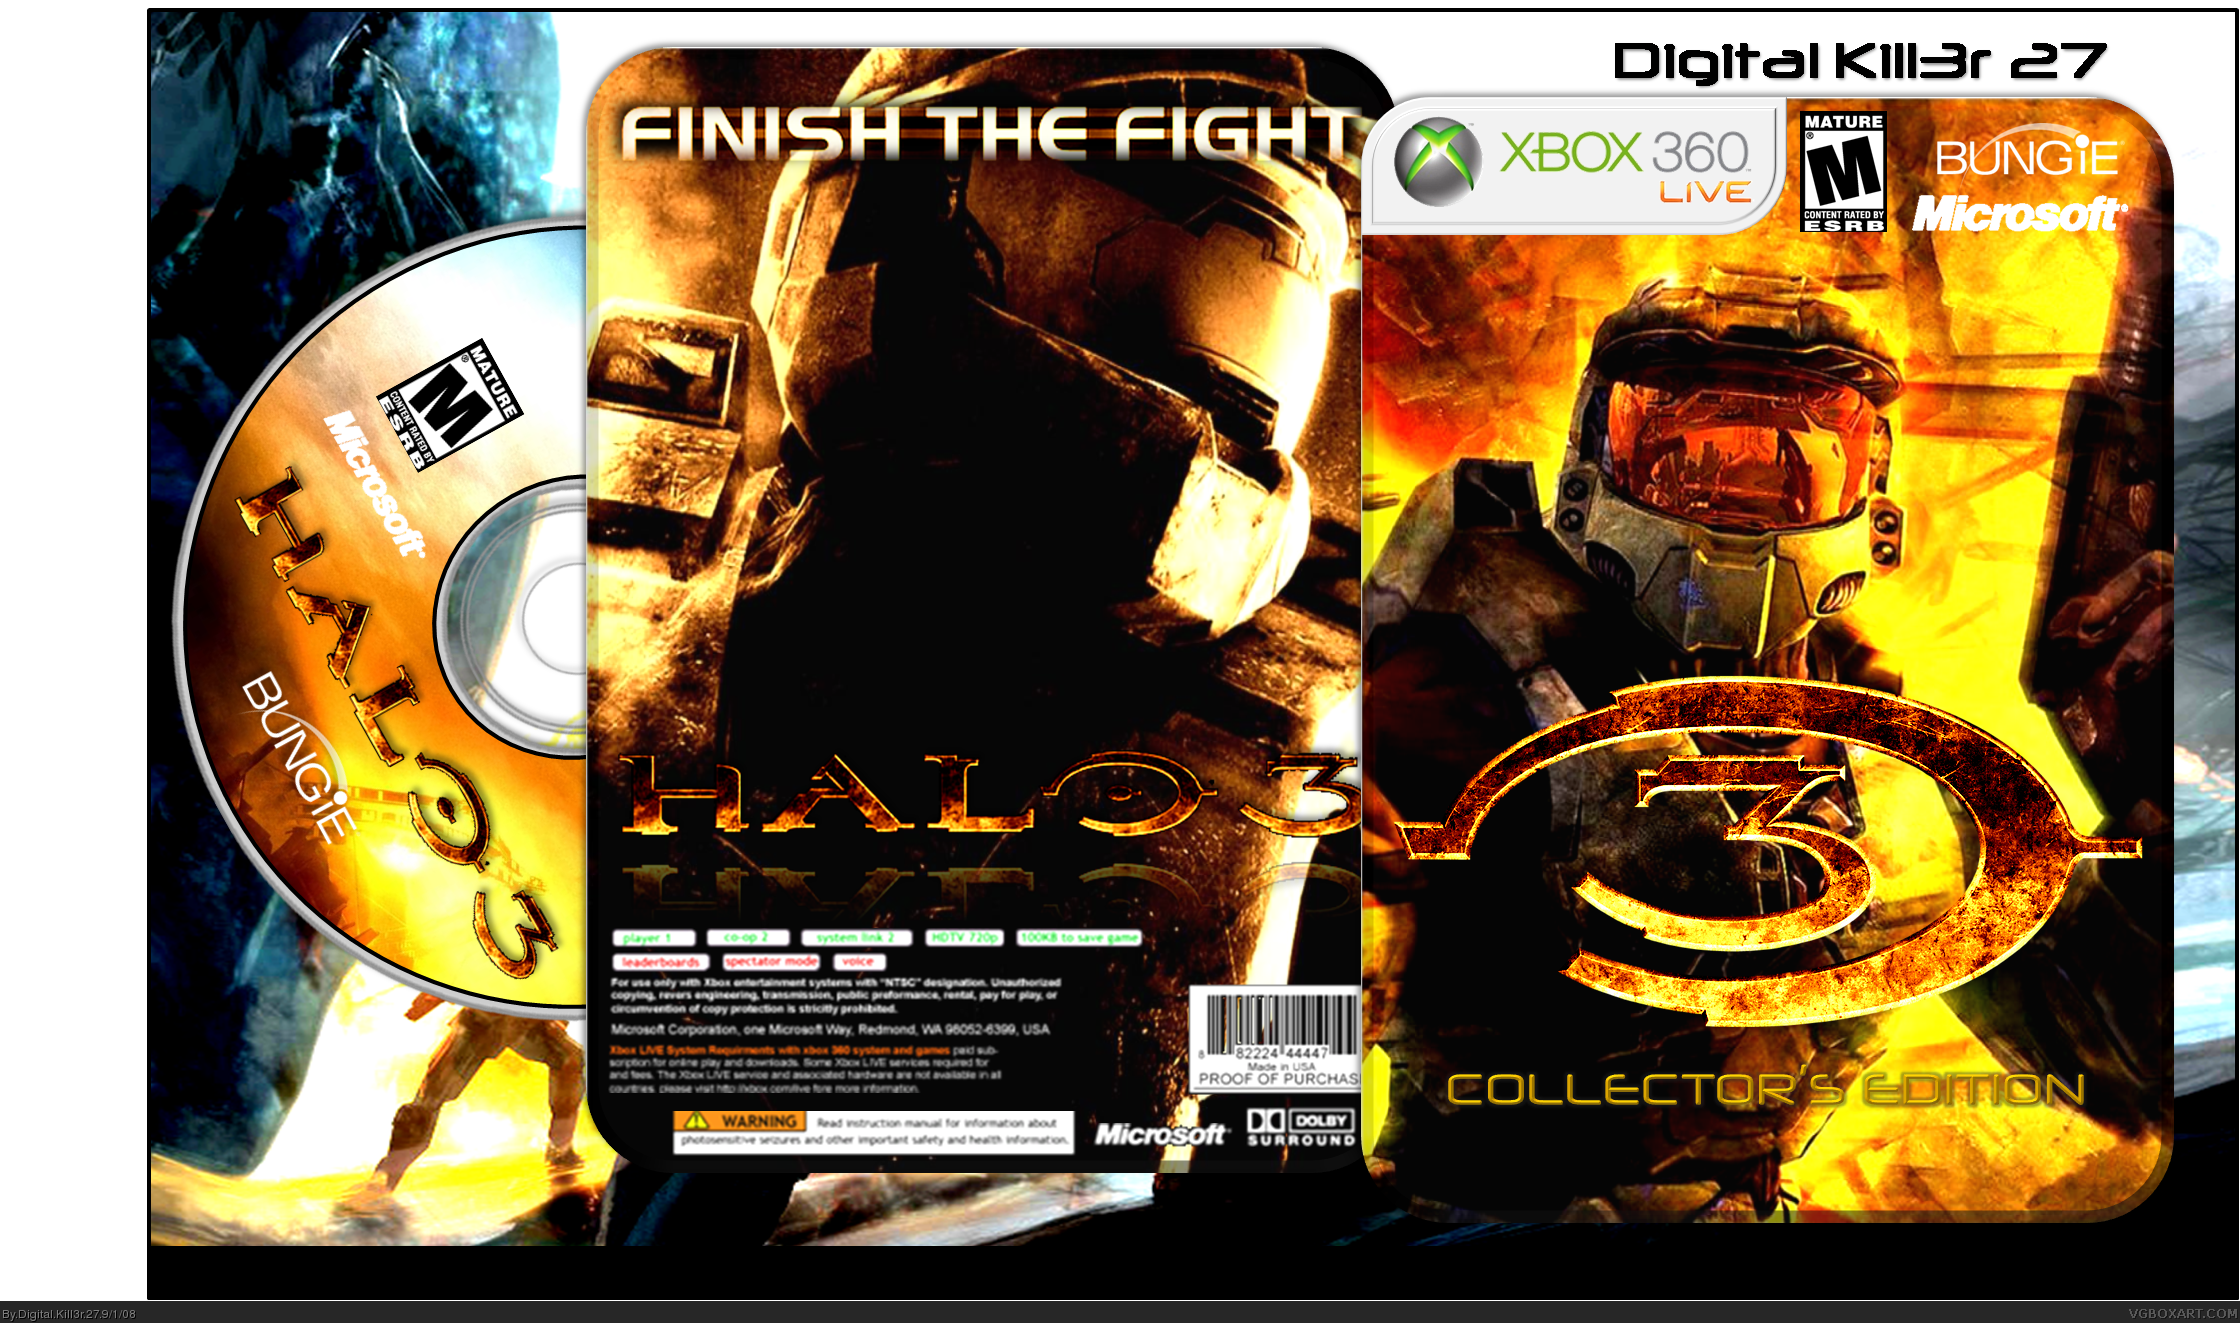 Halo 3 Collector's Edition box cover